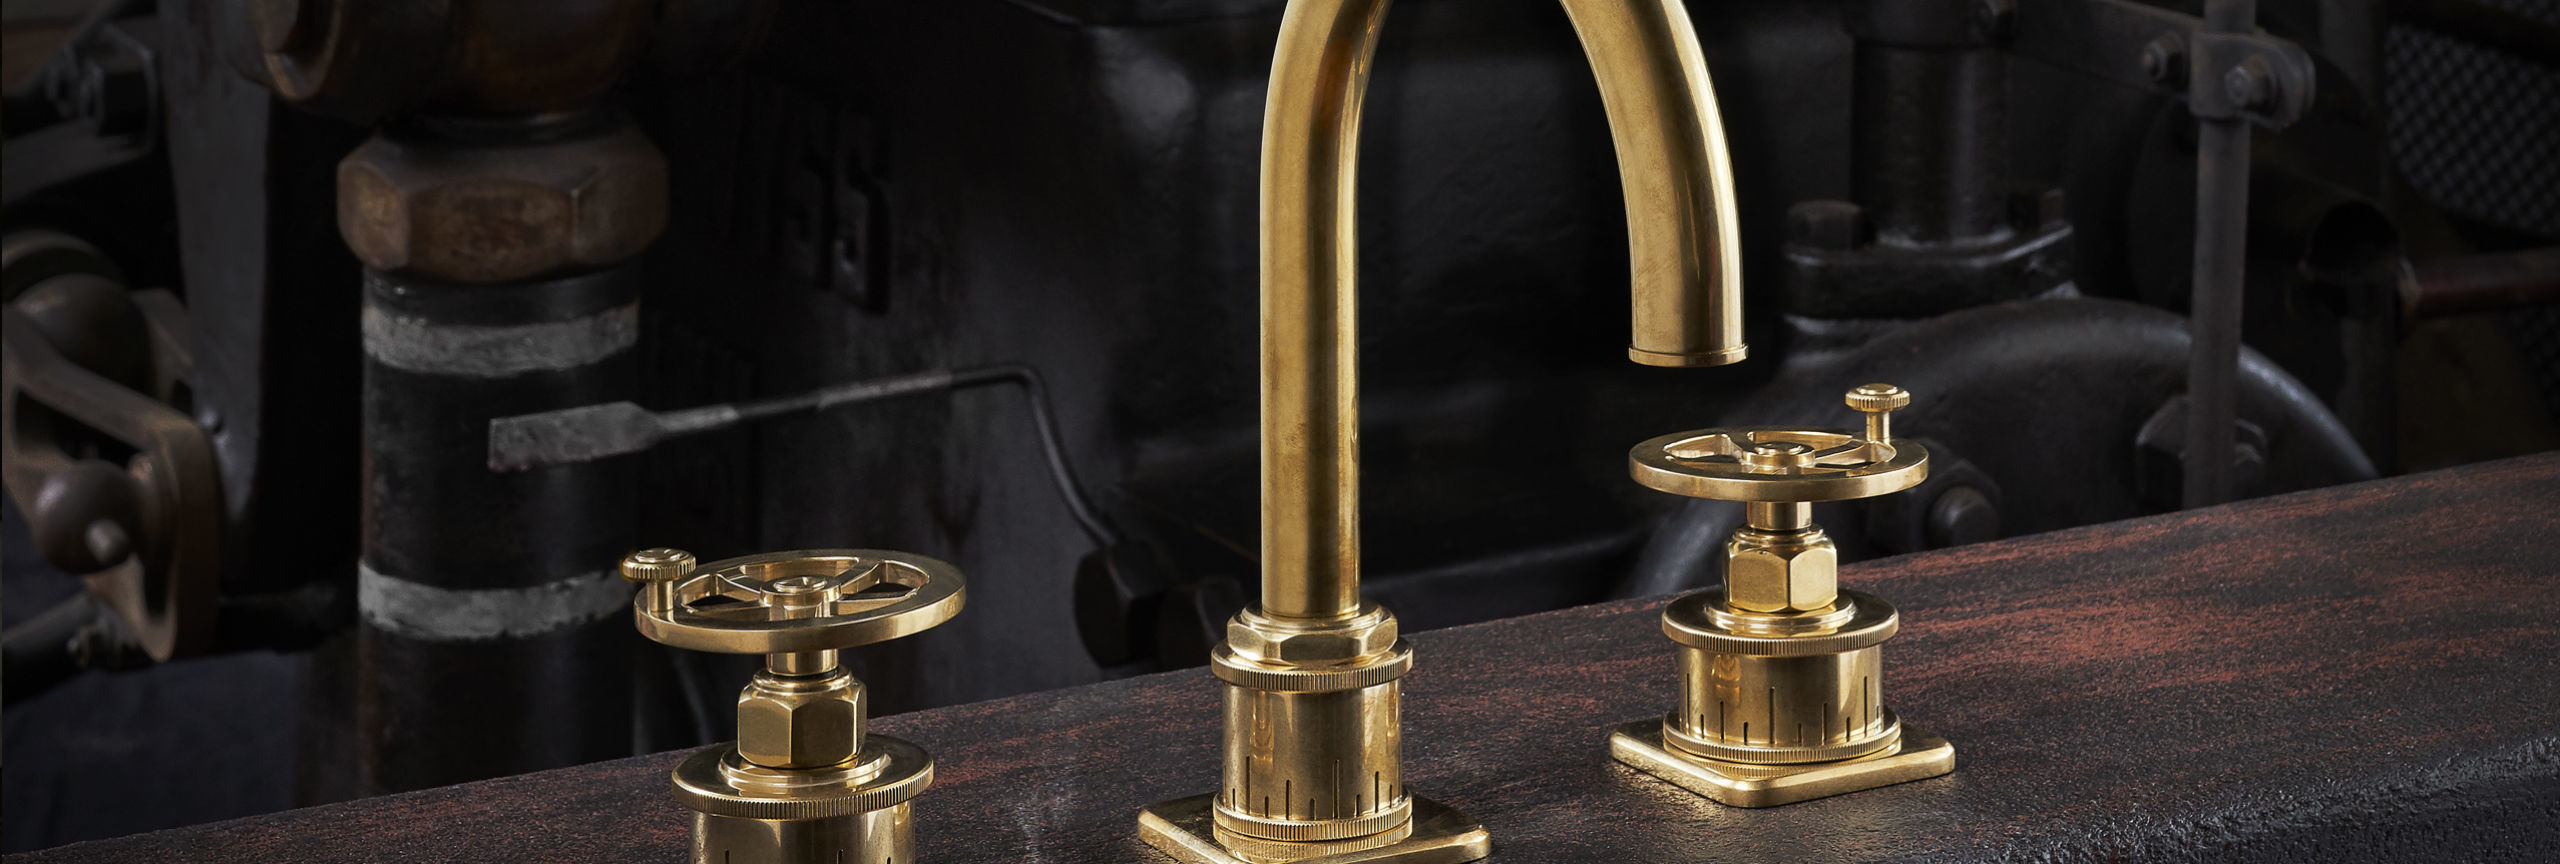 Bathroom series steampunk bay widespread faucet with wheel handles